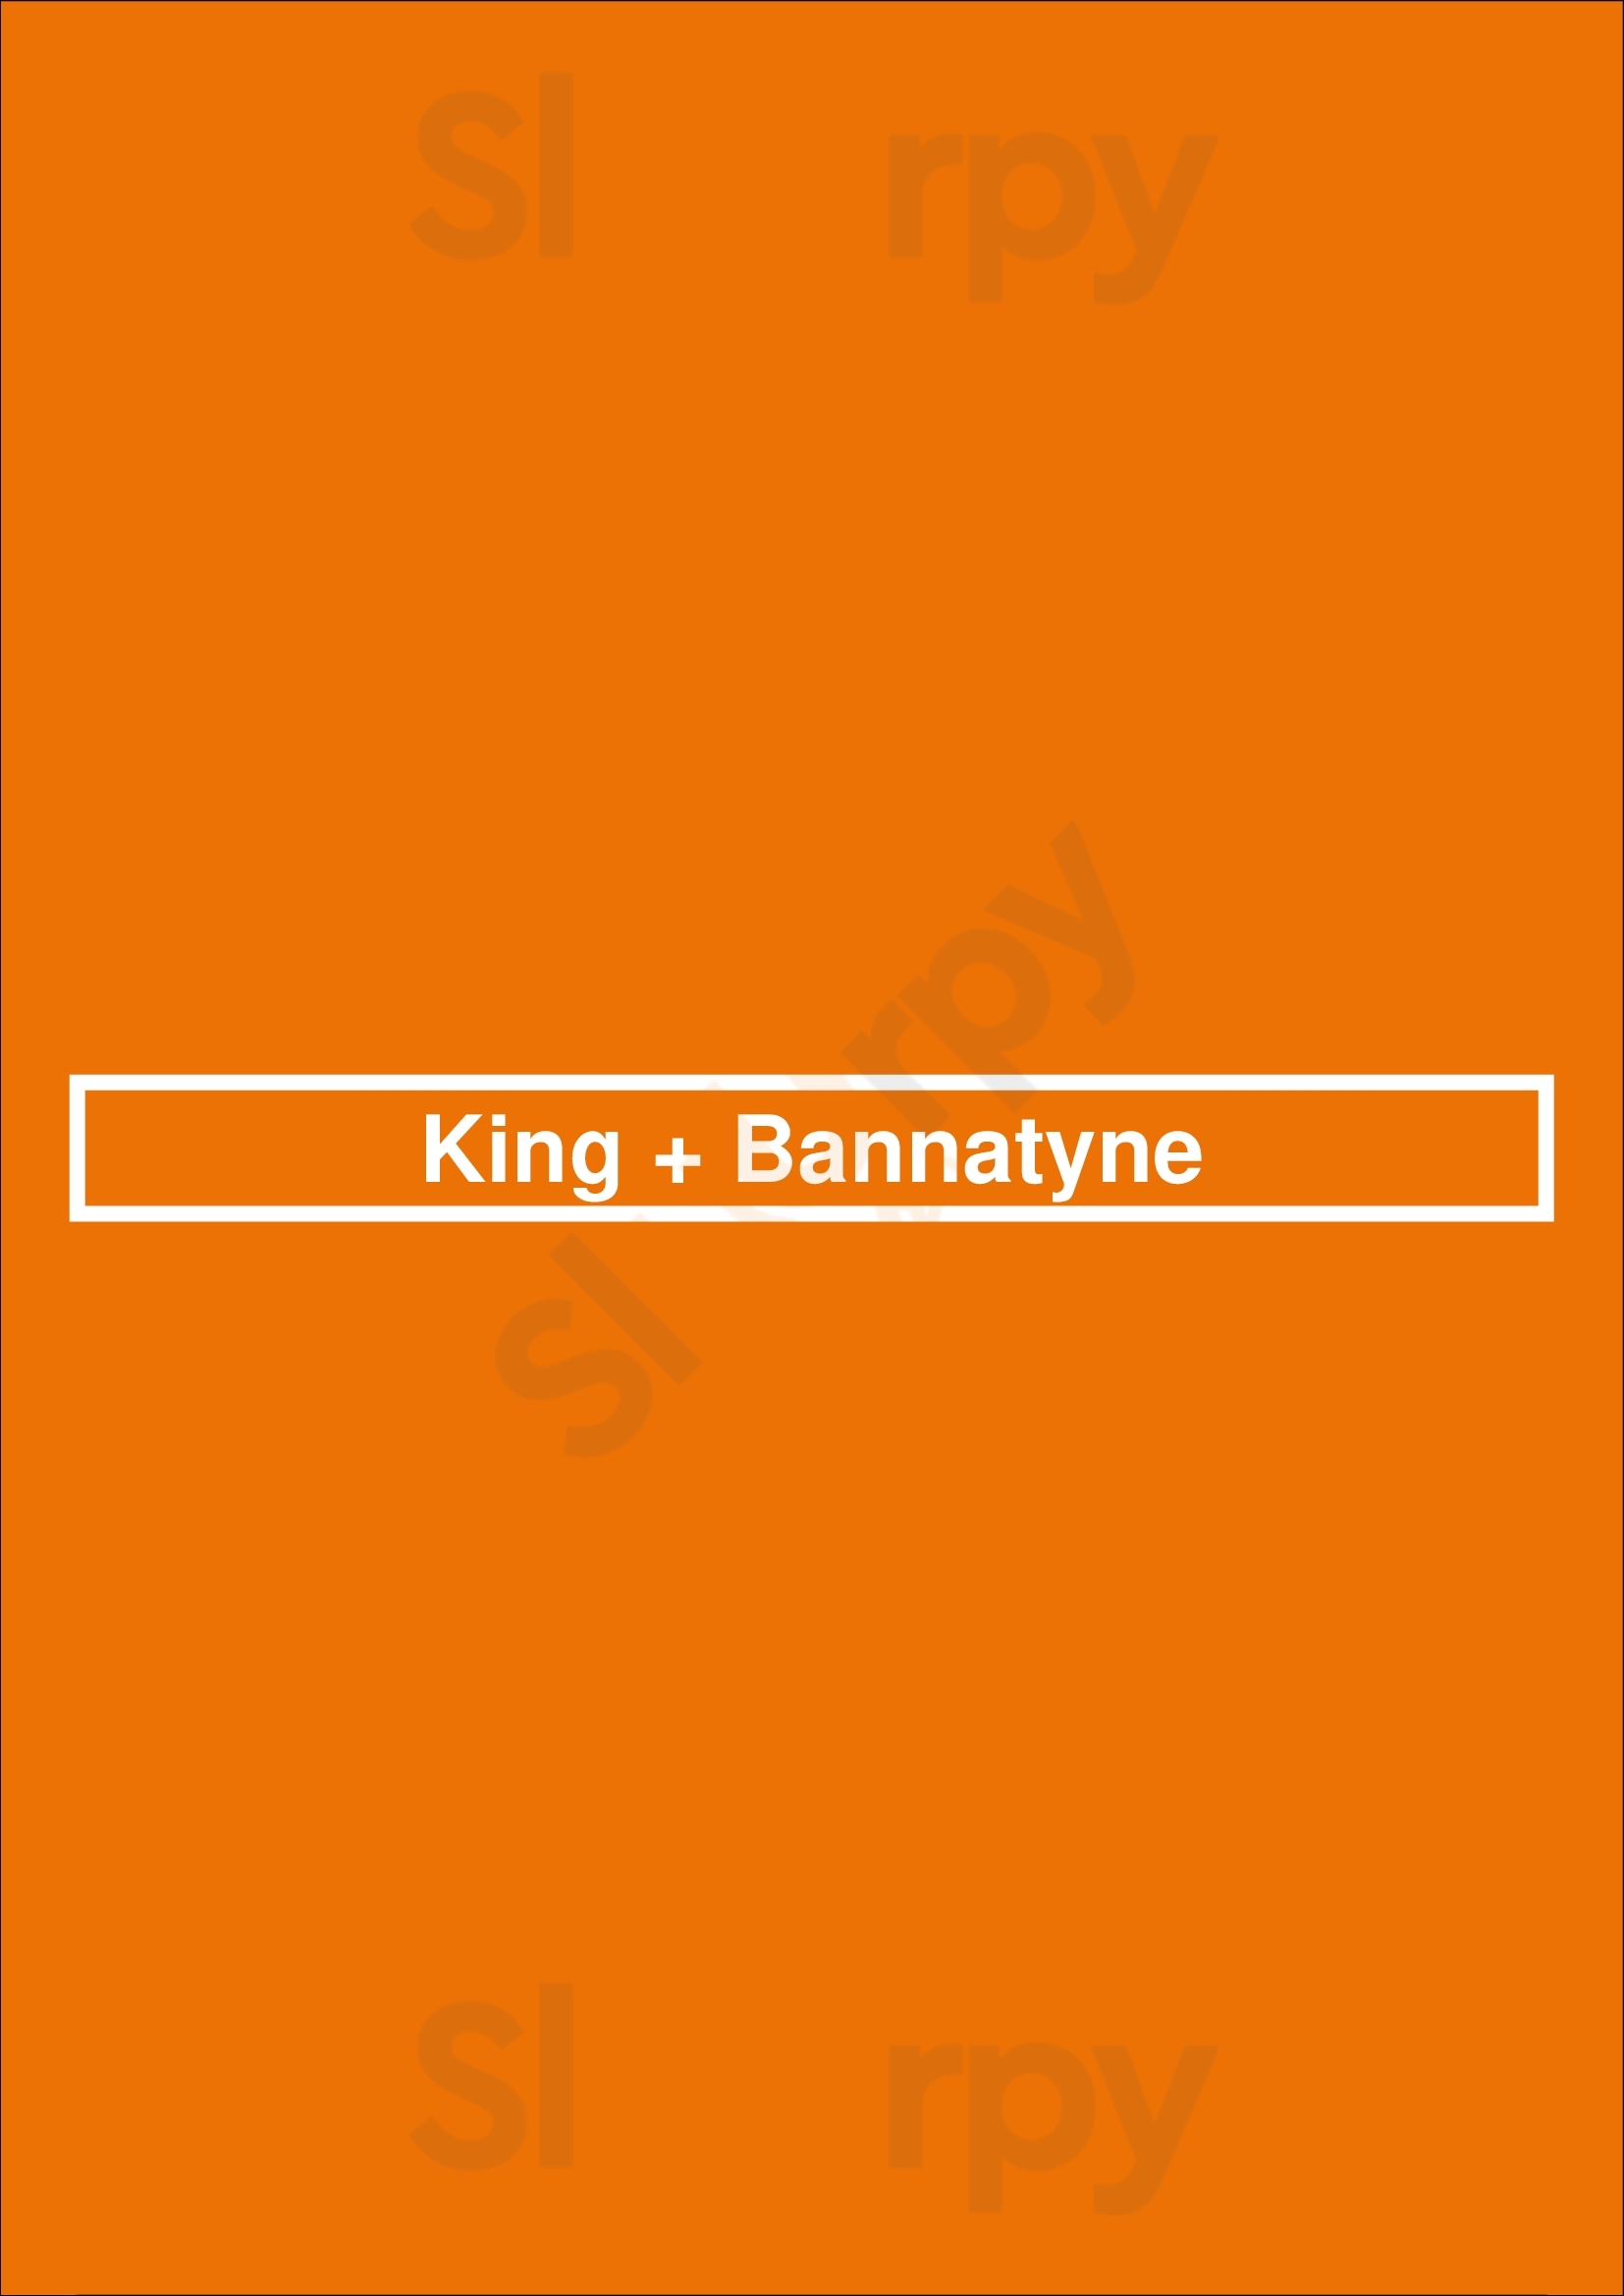 King + Bannatyne Winnipeg Menu - 1